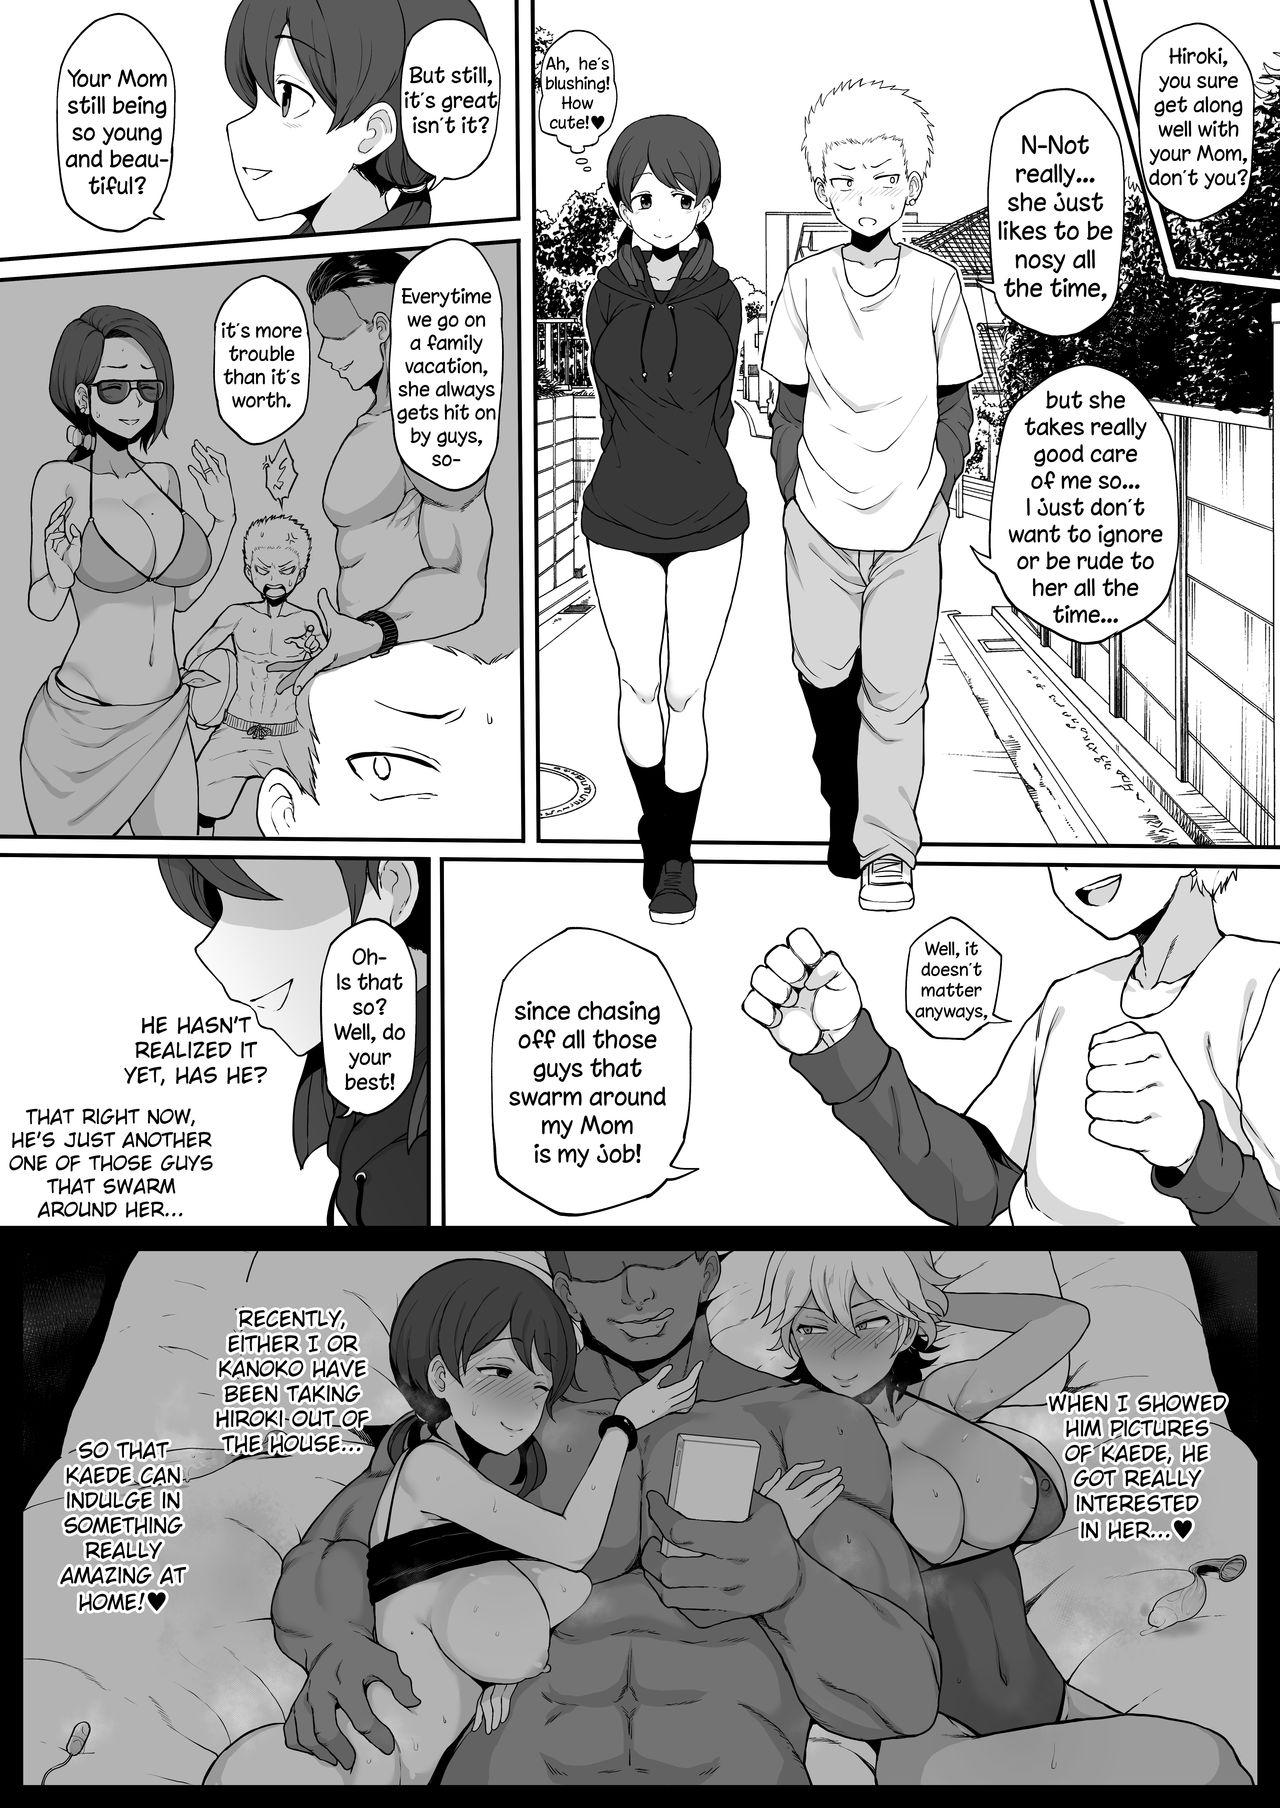 Kokujin no Tenkousei NTR ru Chapters 1-6 part 1 Plus Bonus chapter: Stolen Mother’s Breasts 11